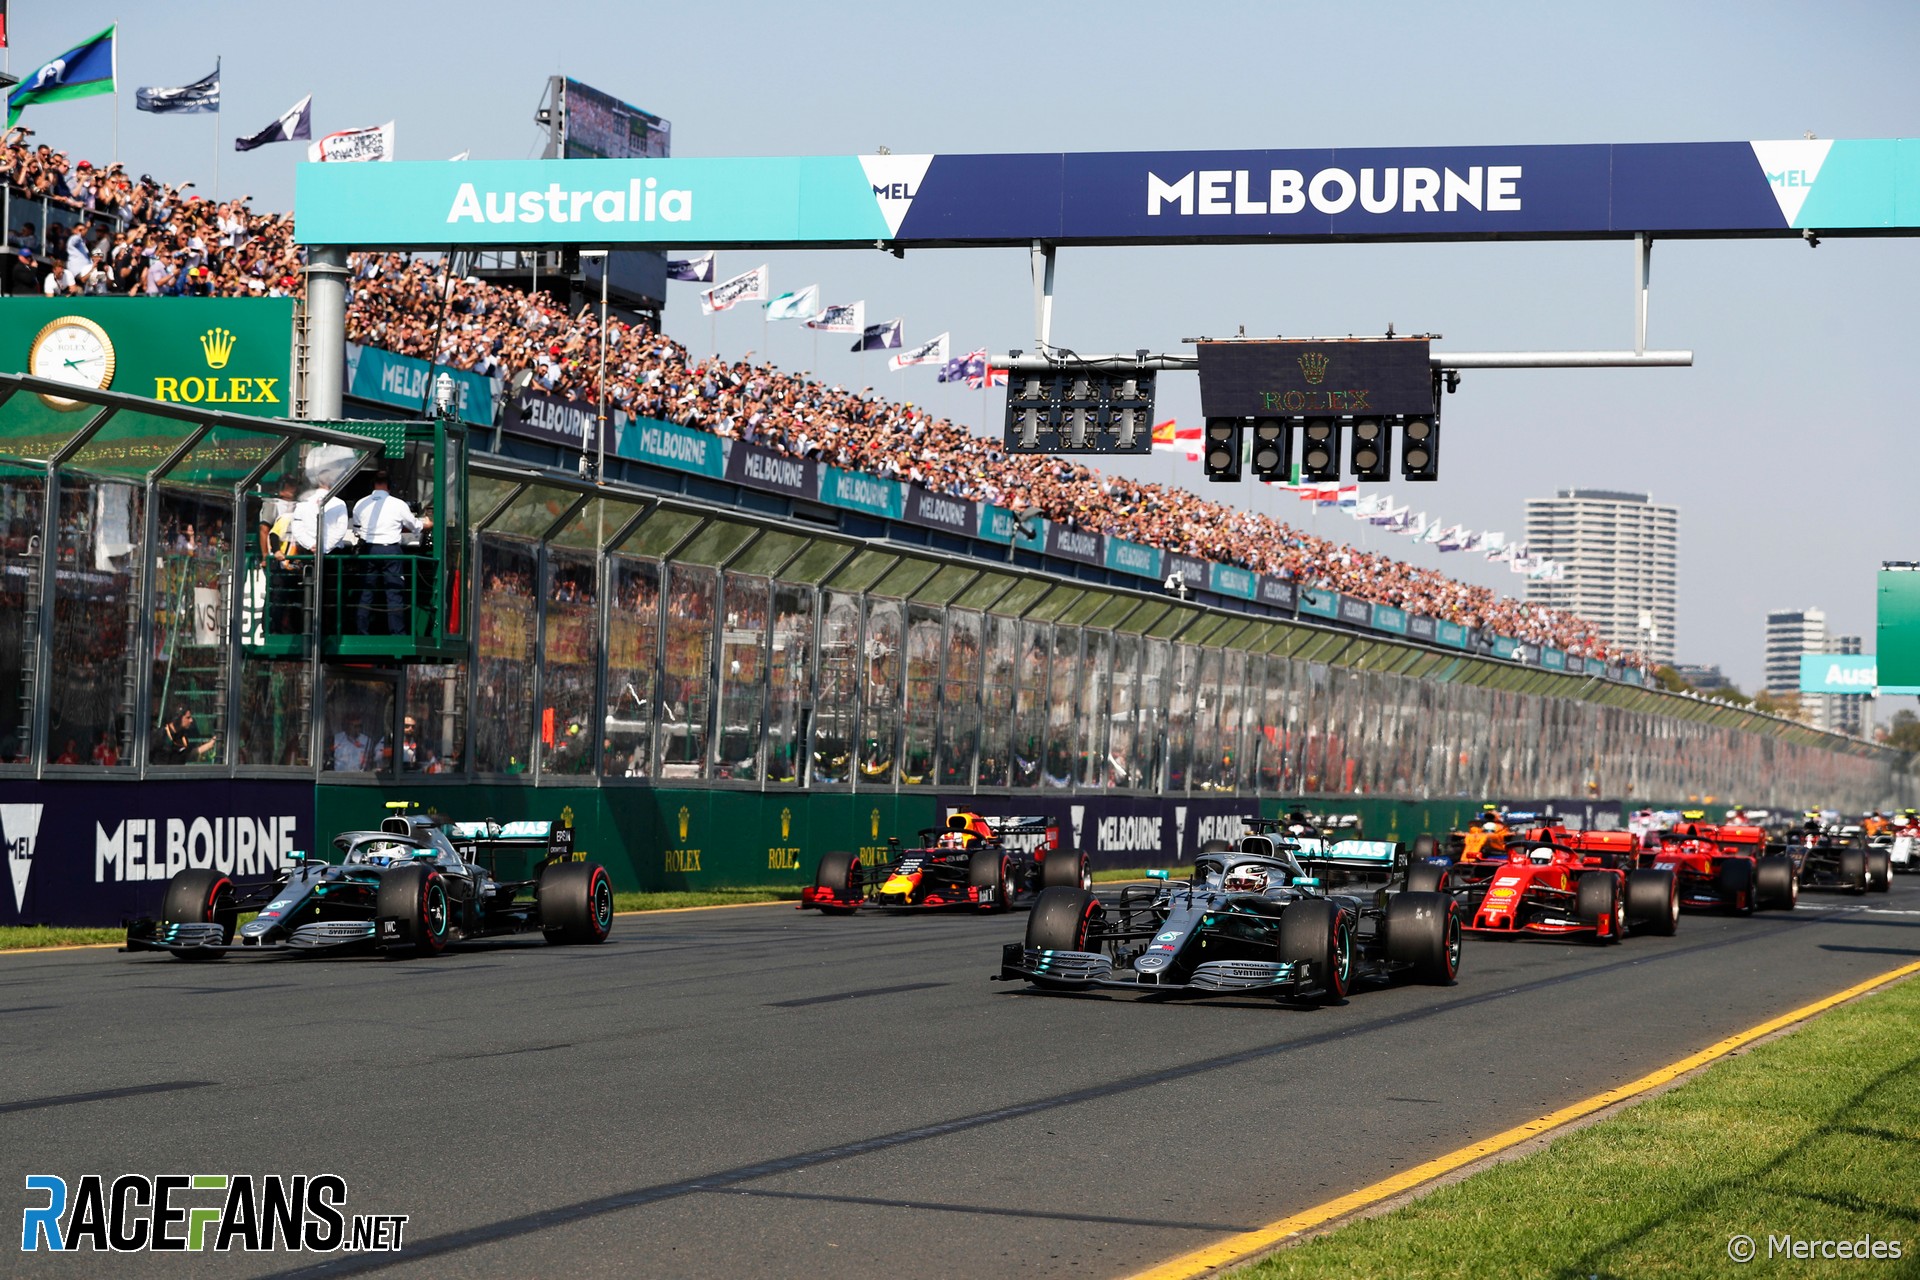 The 2019 F1 season began in Melbourne, Australia